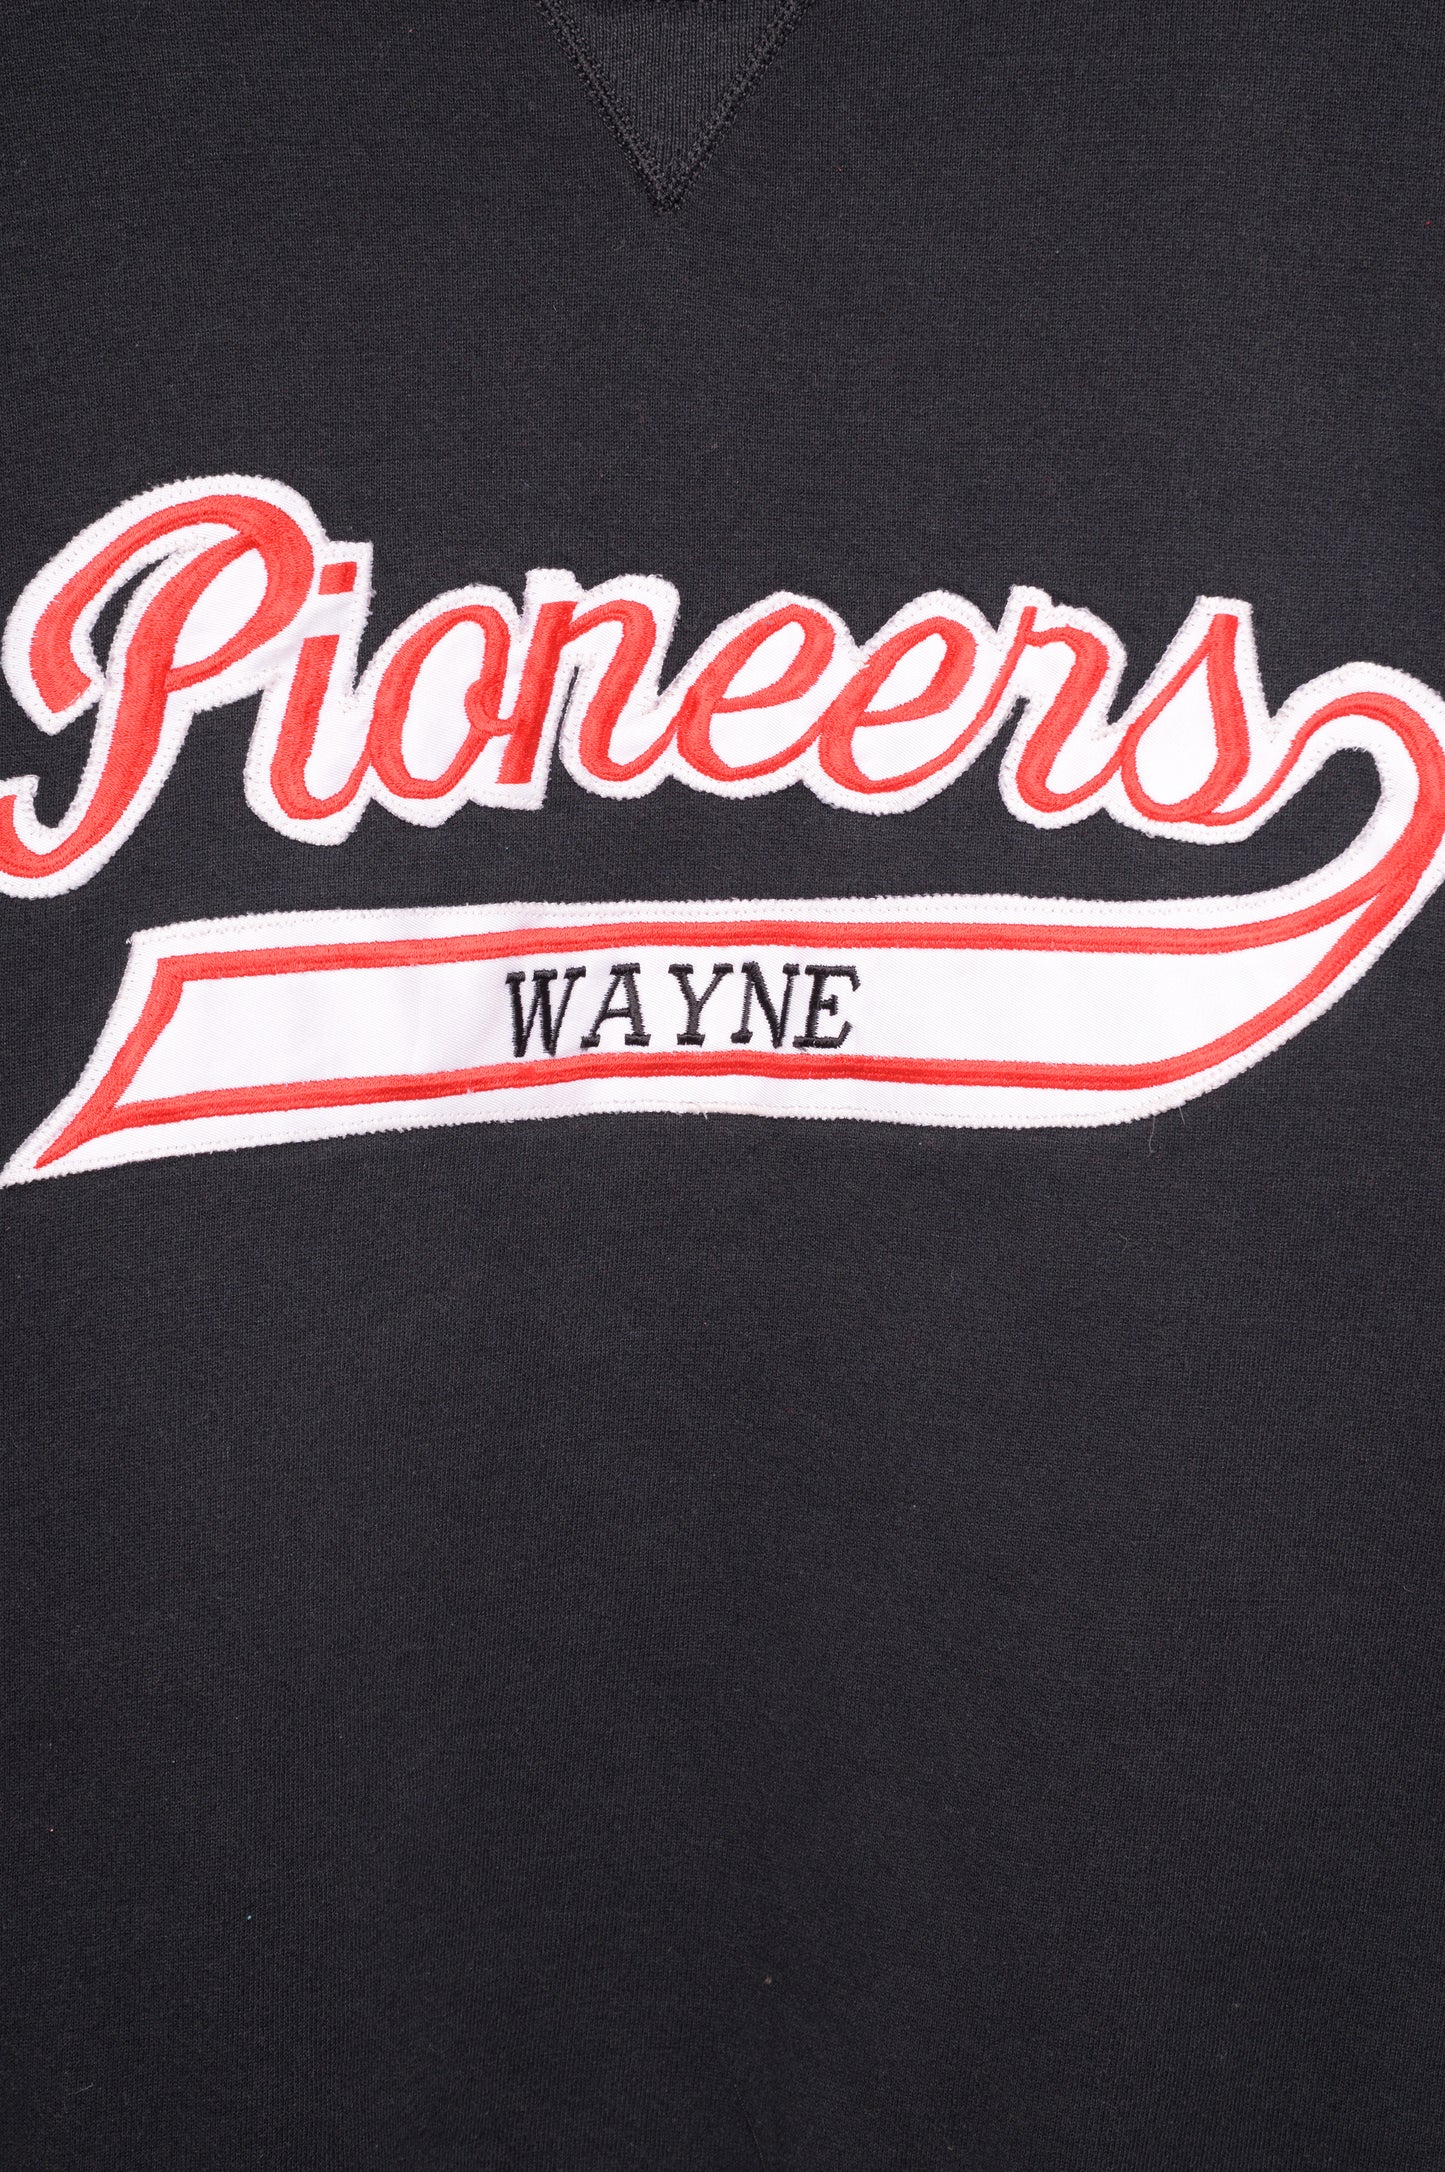 Wayne Pioneers Sweatshirt USA